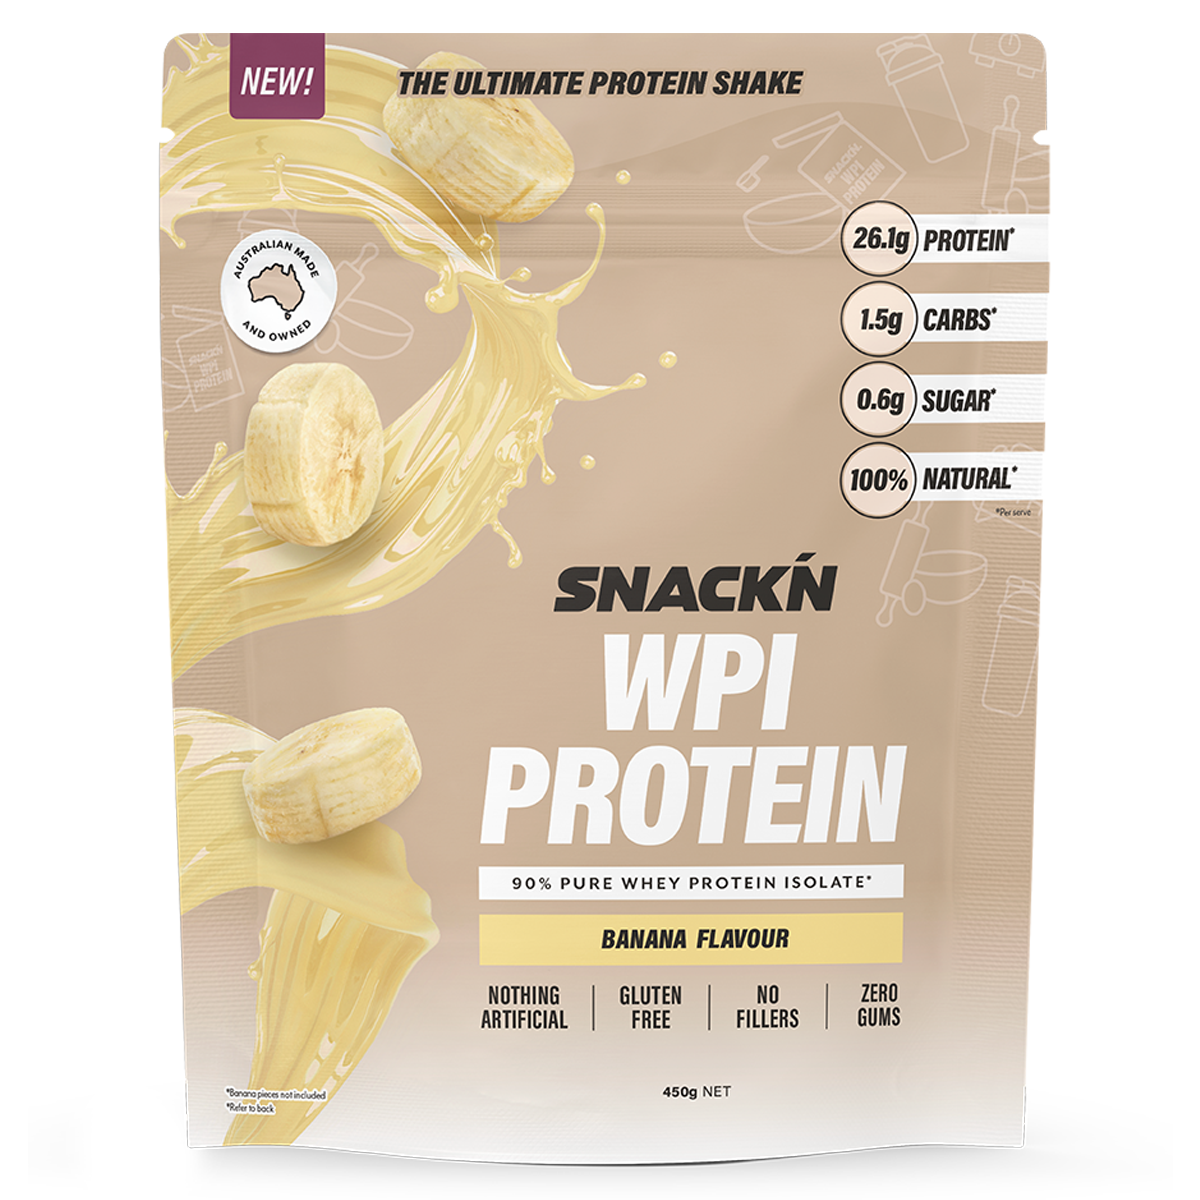 Snackn WPI Protein - Super Nutrition